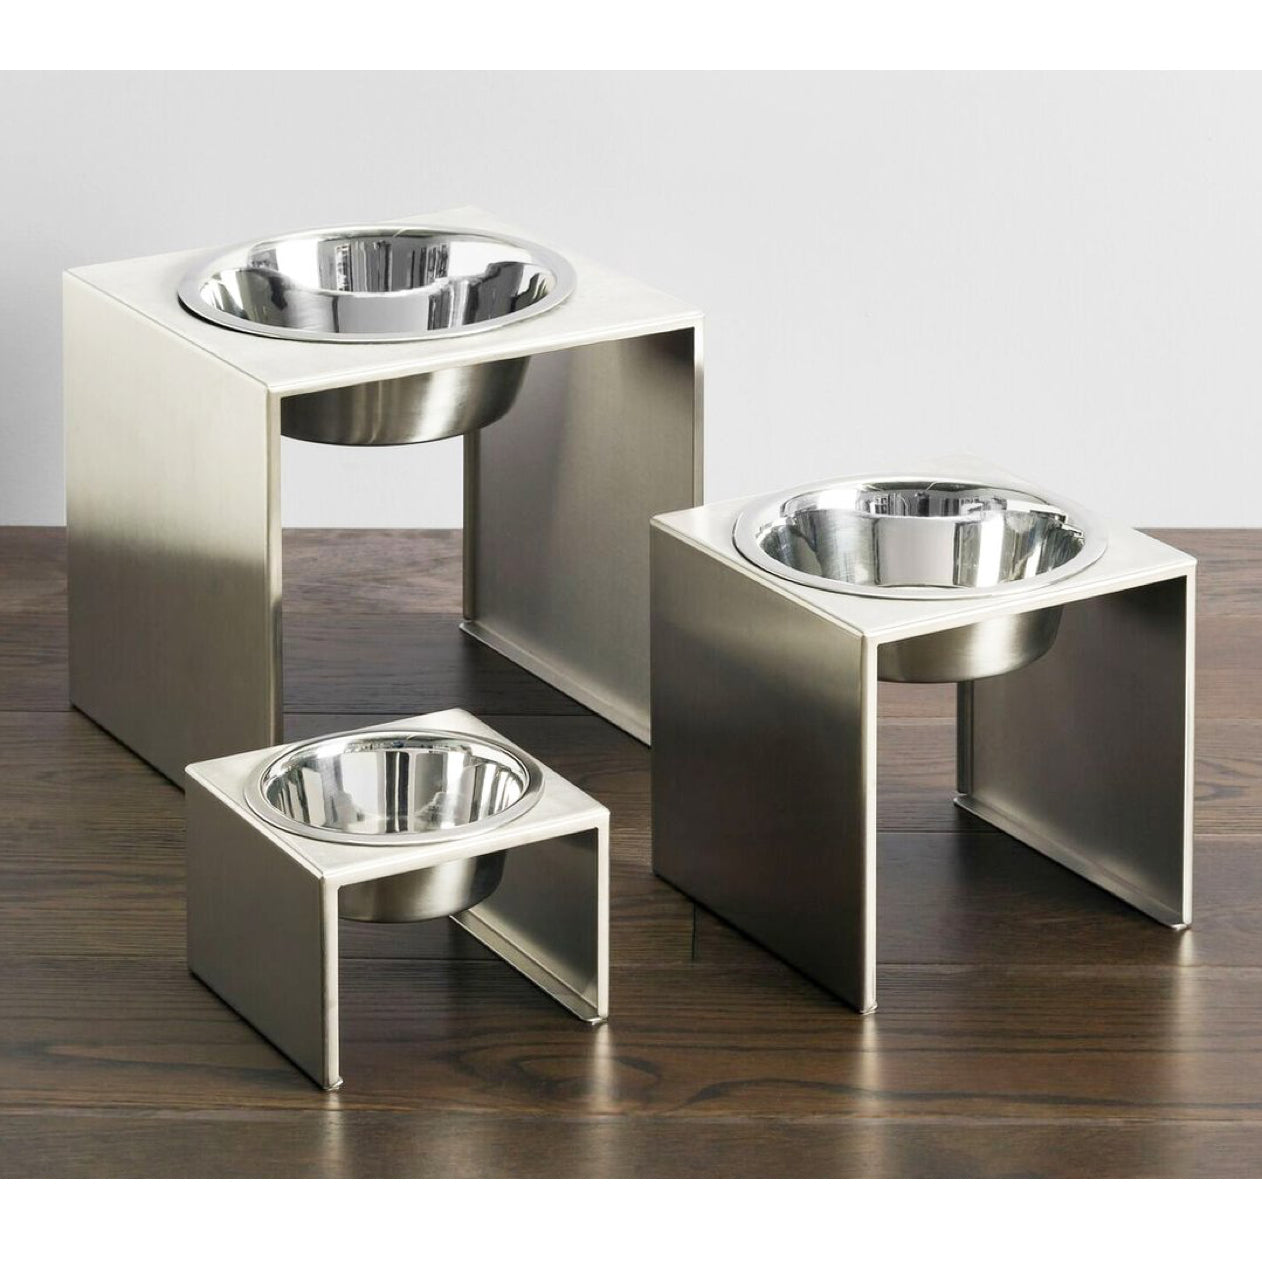 Single Elevated Dog Bowl Stand Set. S - XL Modern Raised Dog Food